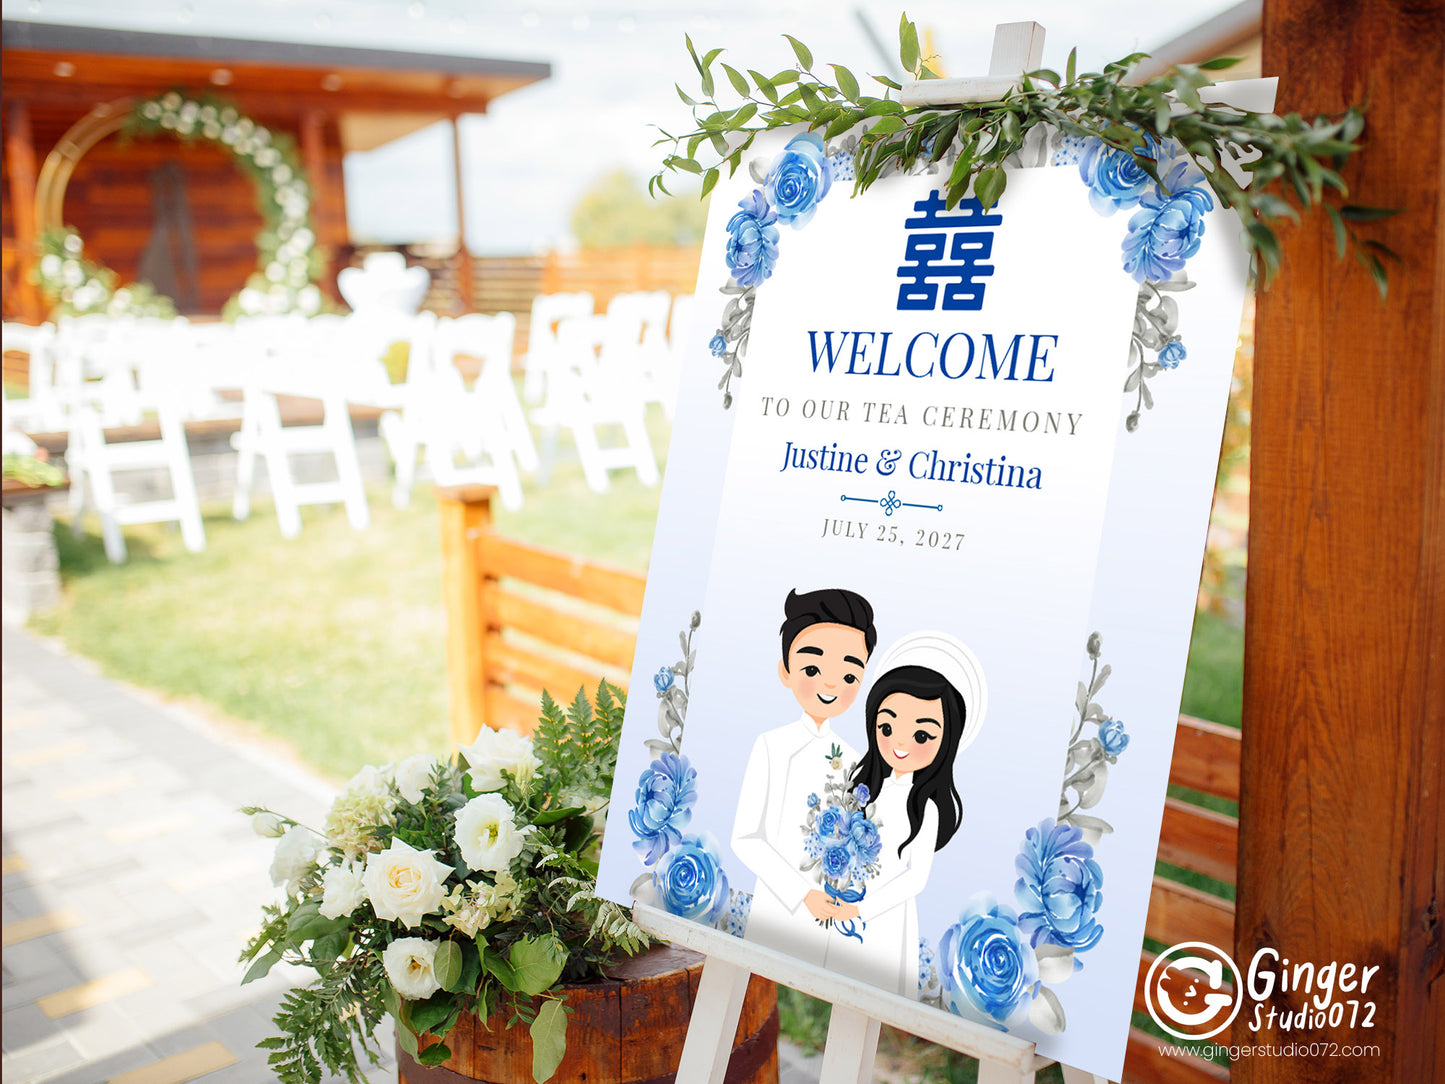 Cute Vietnamese Wedding Welcome sign, customize wedding sign, Tea ceremony event #wcsl2307010V